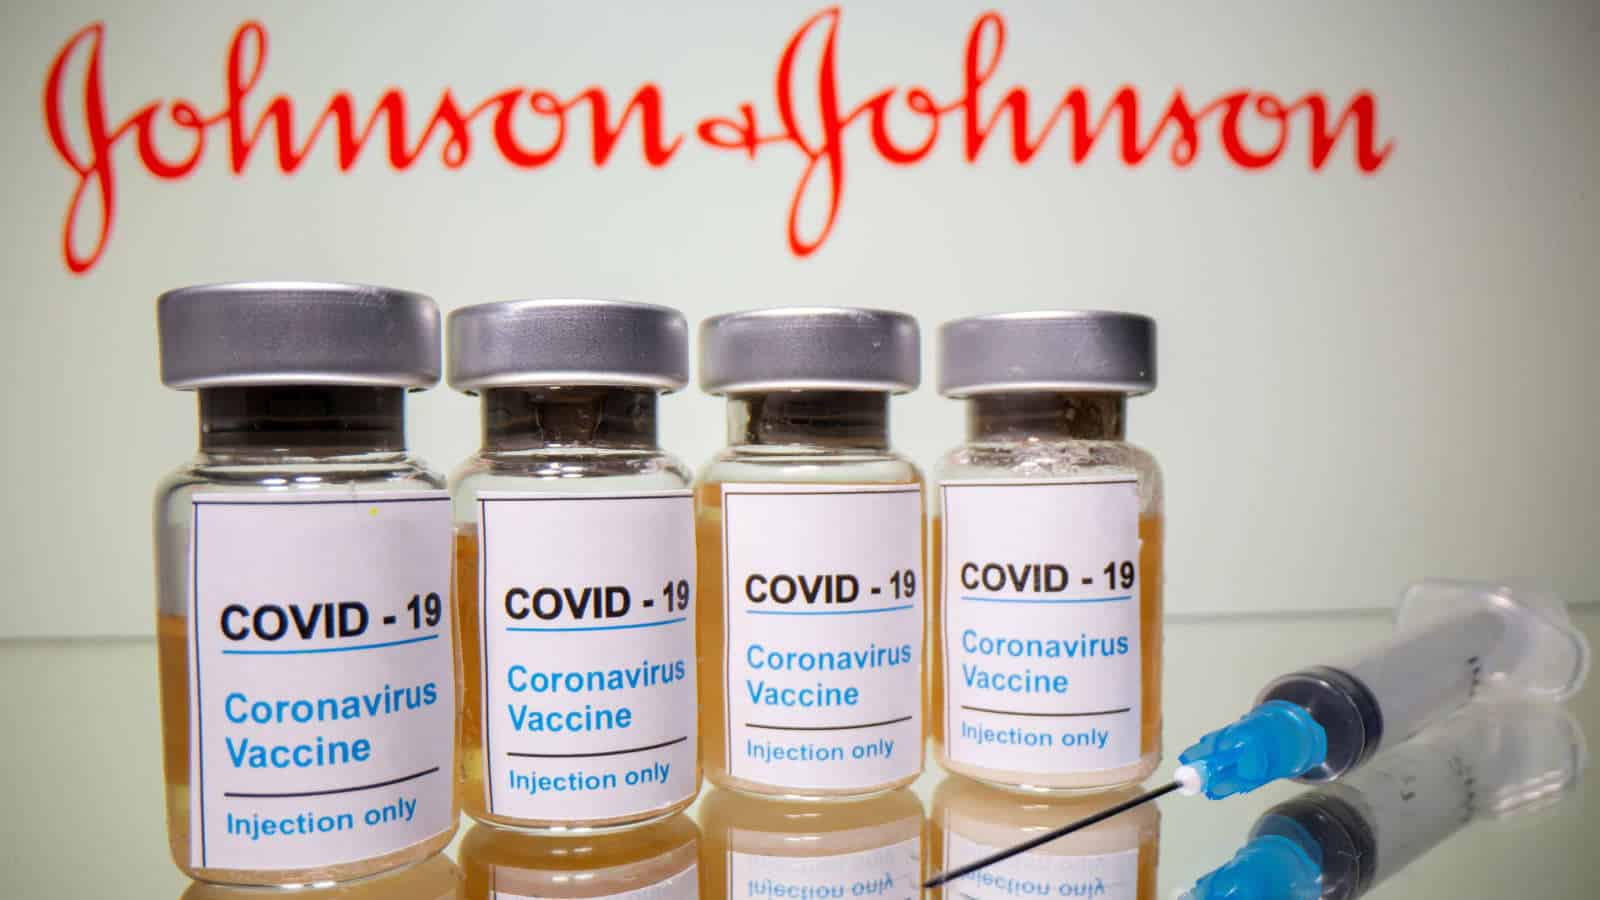 Public Health approves resuming distribution of Johnson & Johnson vaccine